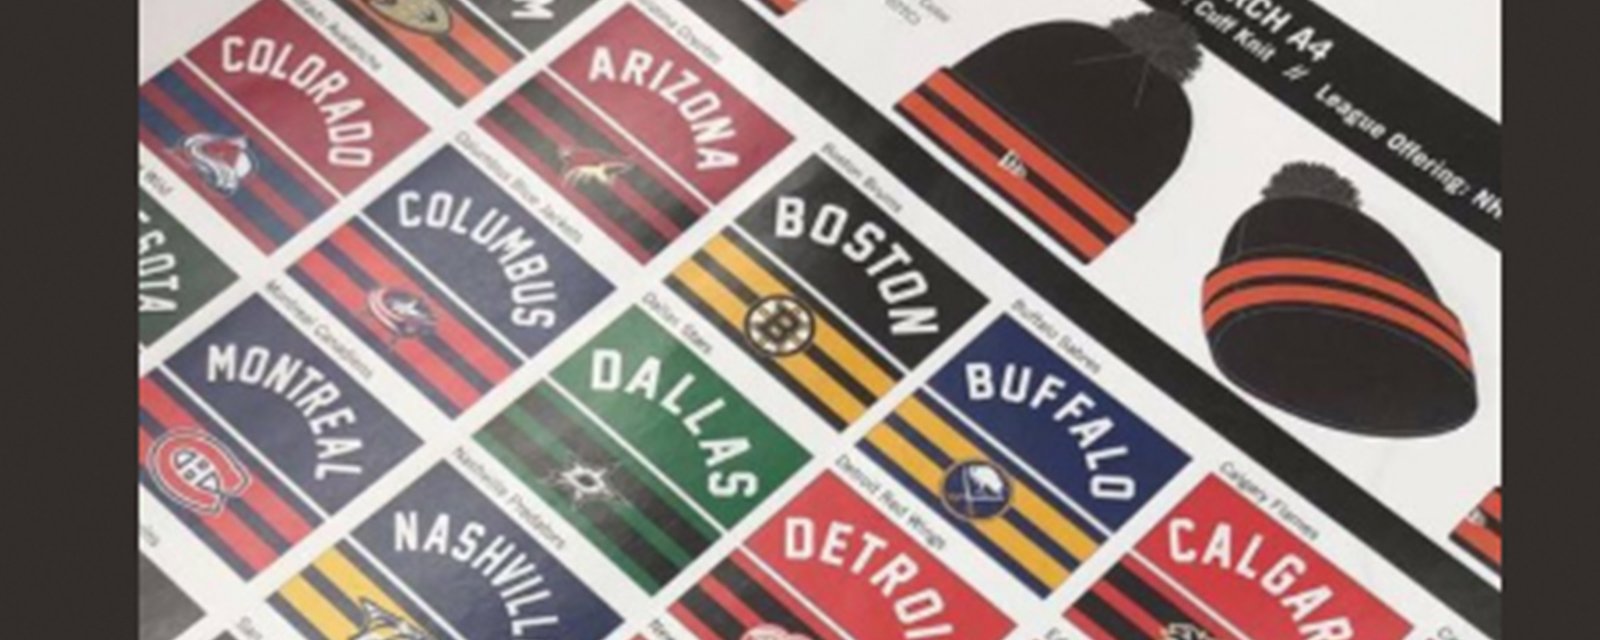 Leaked photo reveals team logo changes for 2019-20 NHL season